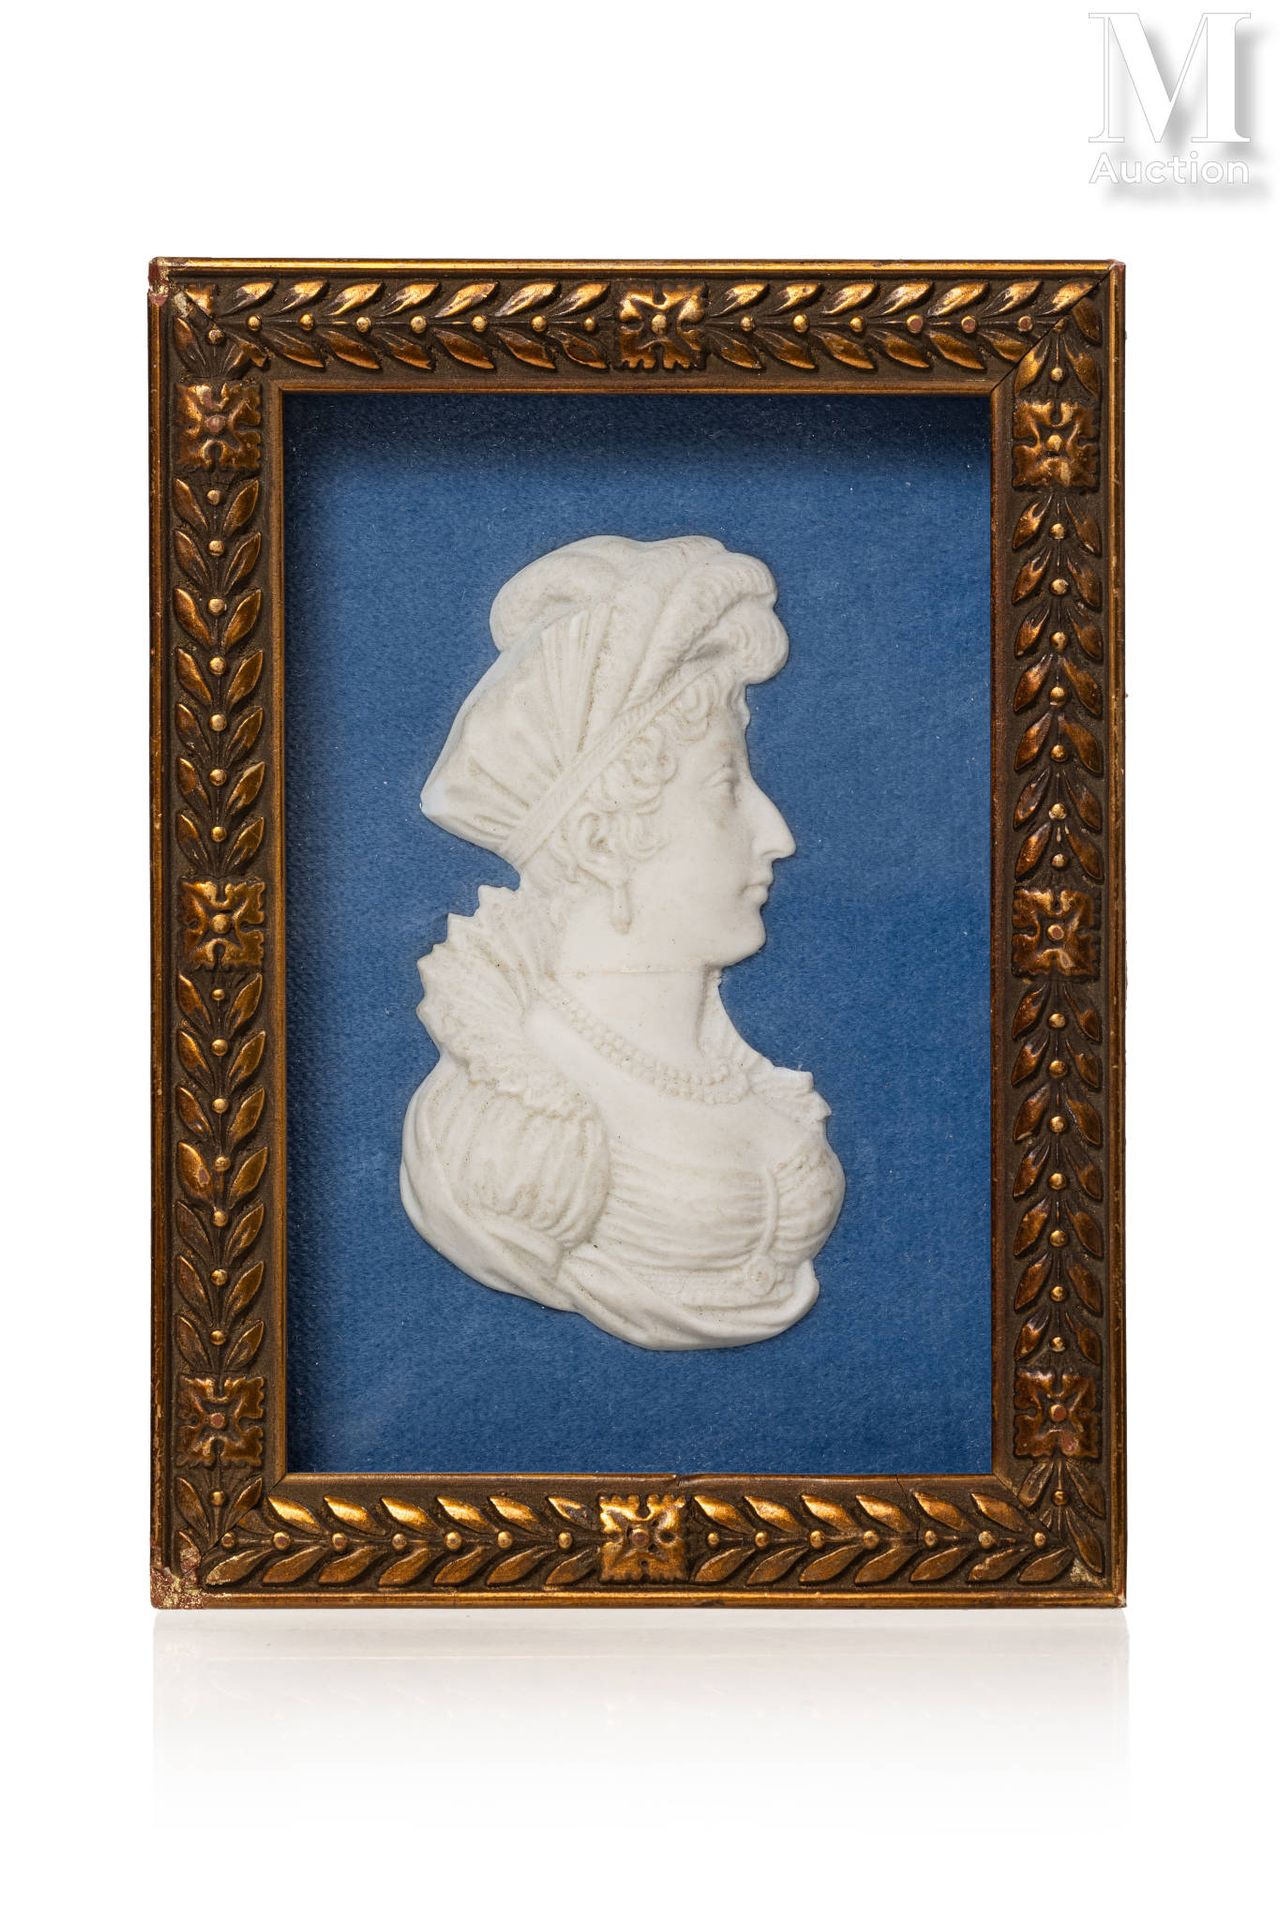 MARIE-THÉRÈSE DE FRANCE (1778-1851) 路易十六和玛丽-安托瓦内特之女昂古莱姆公爵夫人的硬质瓷坯，贴在蓝色天鹅绒背景上。颈部的水&hellip;